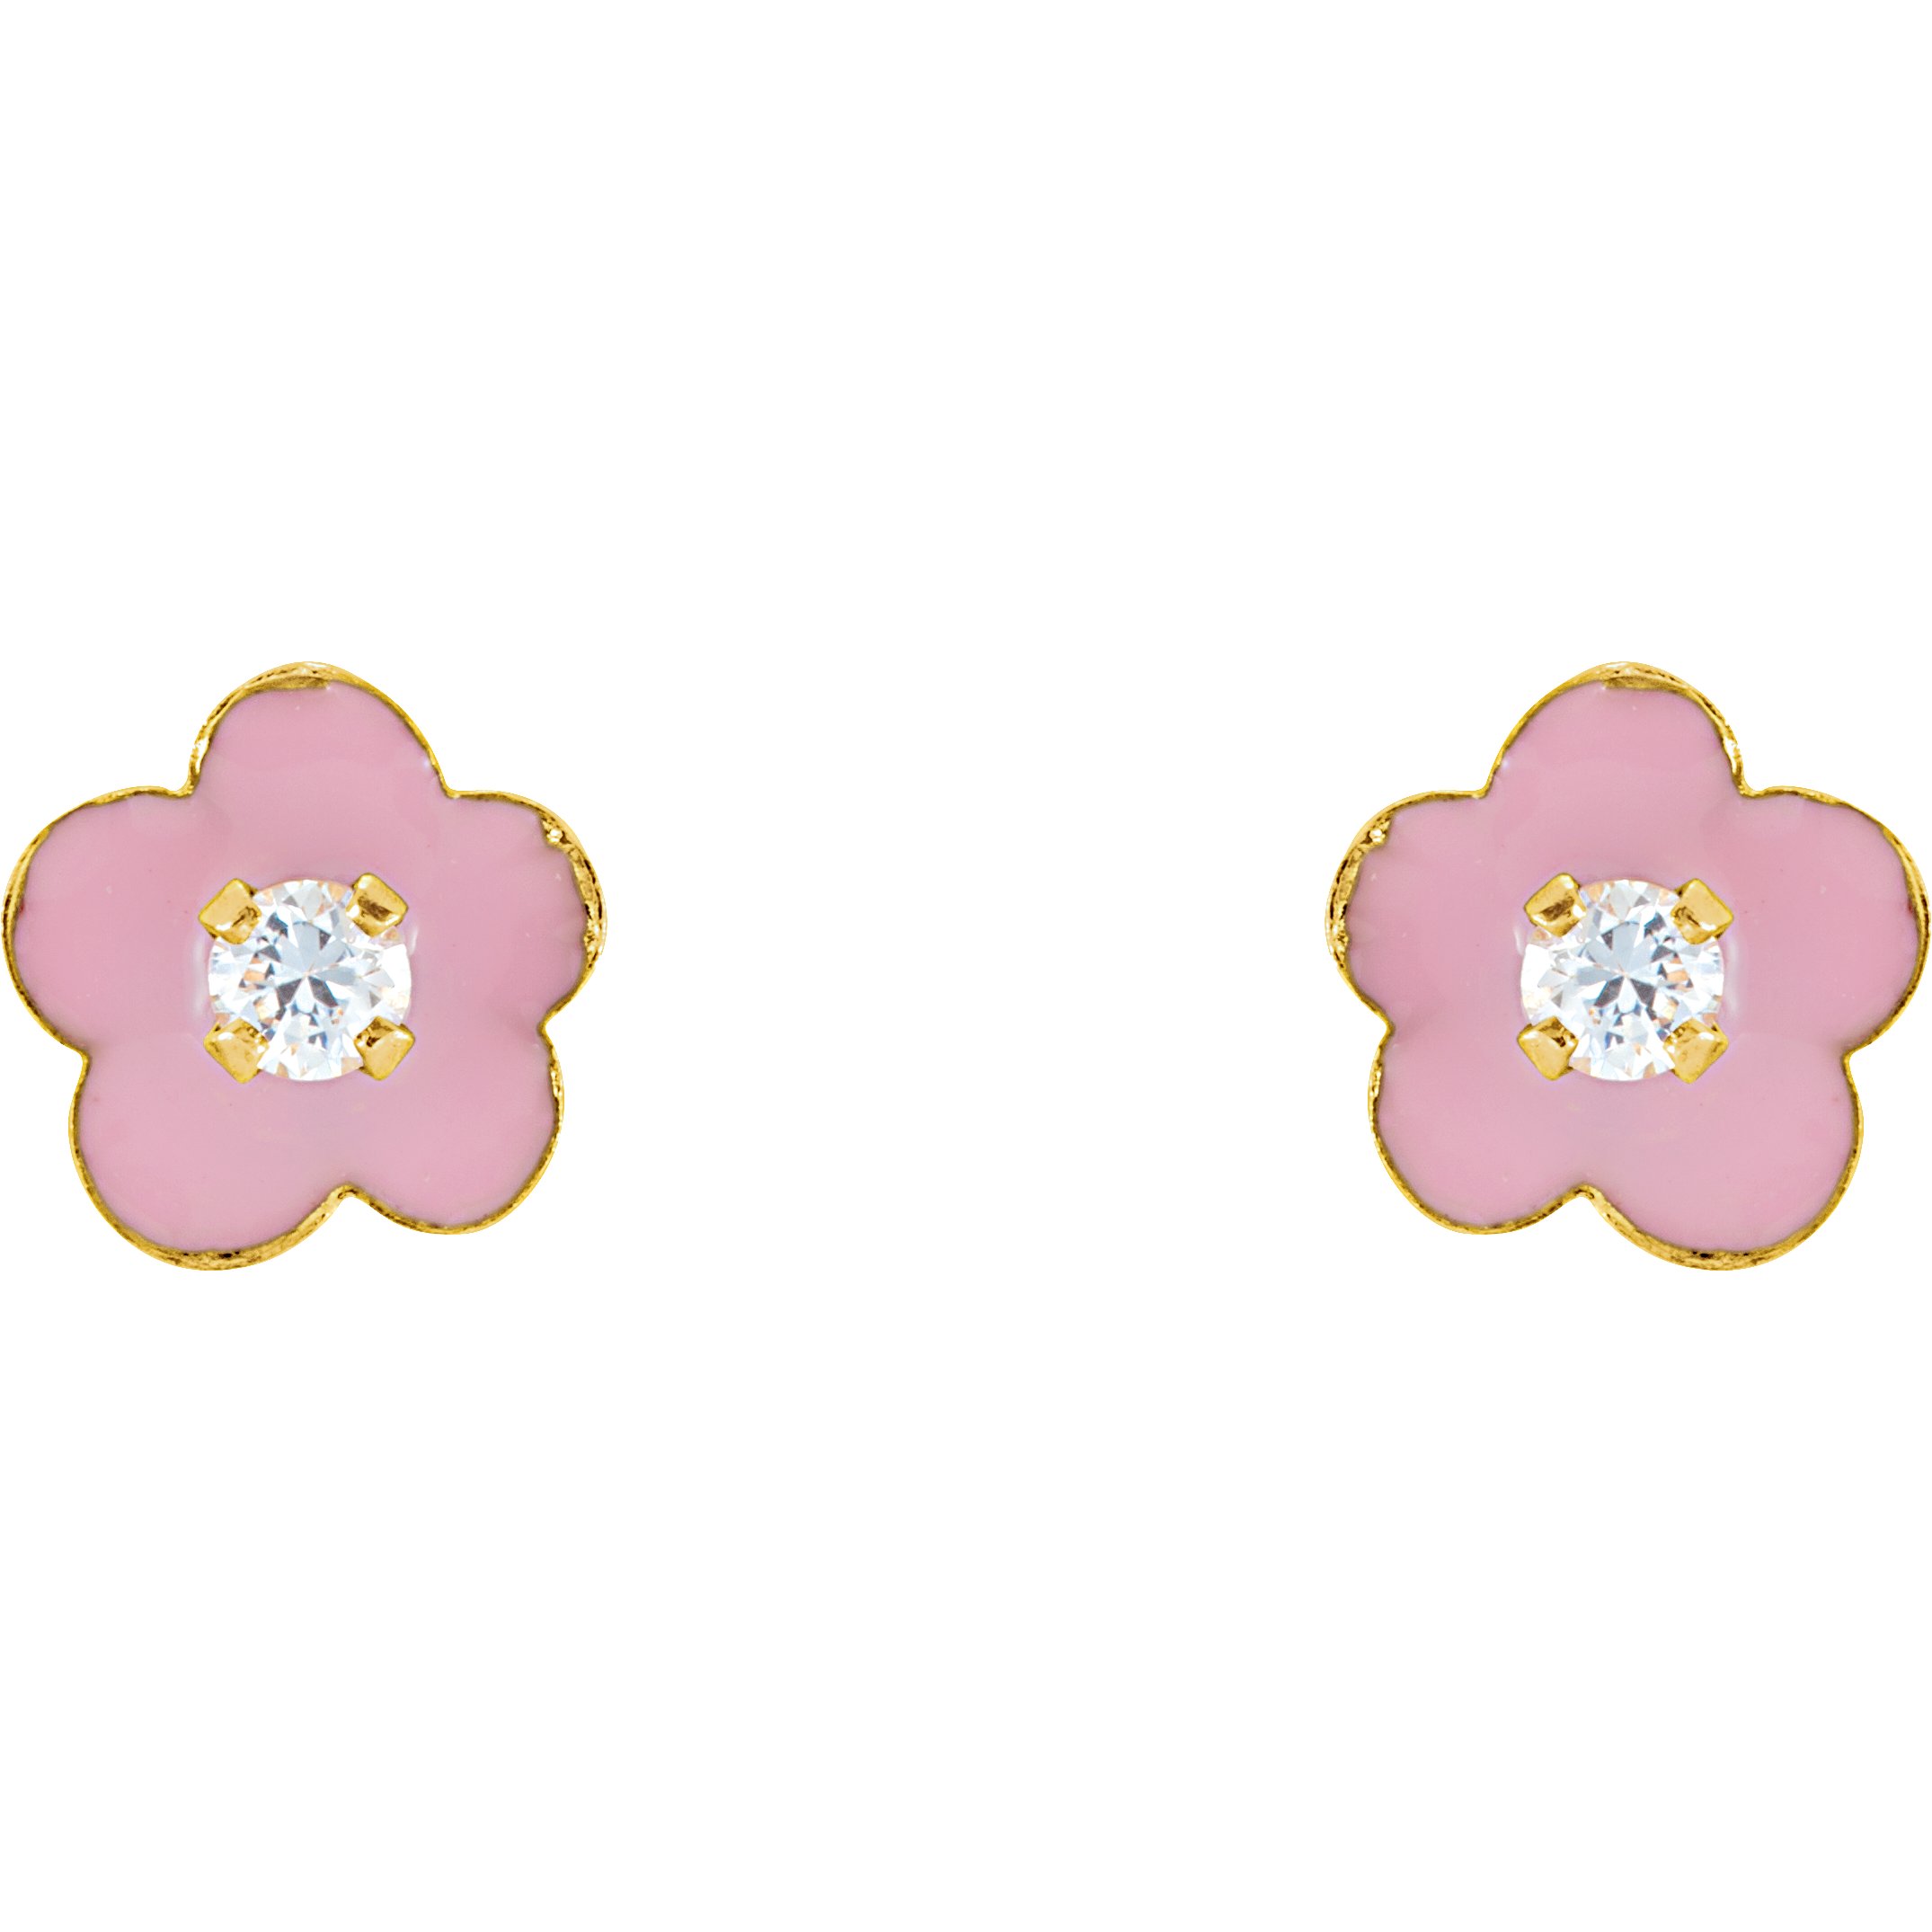 14K Yellow 2 mm Imitation White Cubic Zirconia & Pink Enamel Flower Youth Earrings